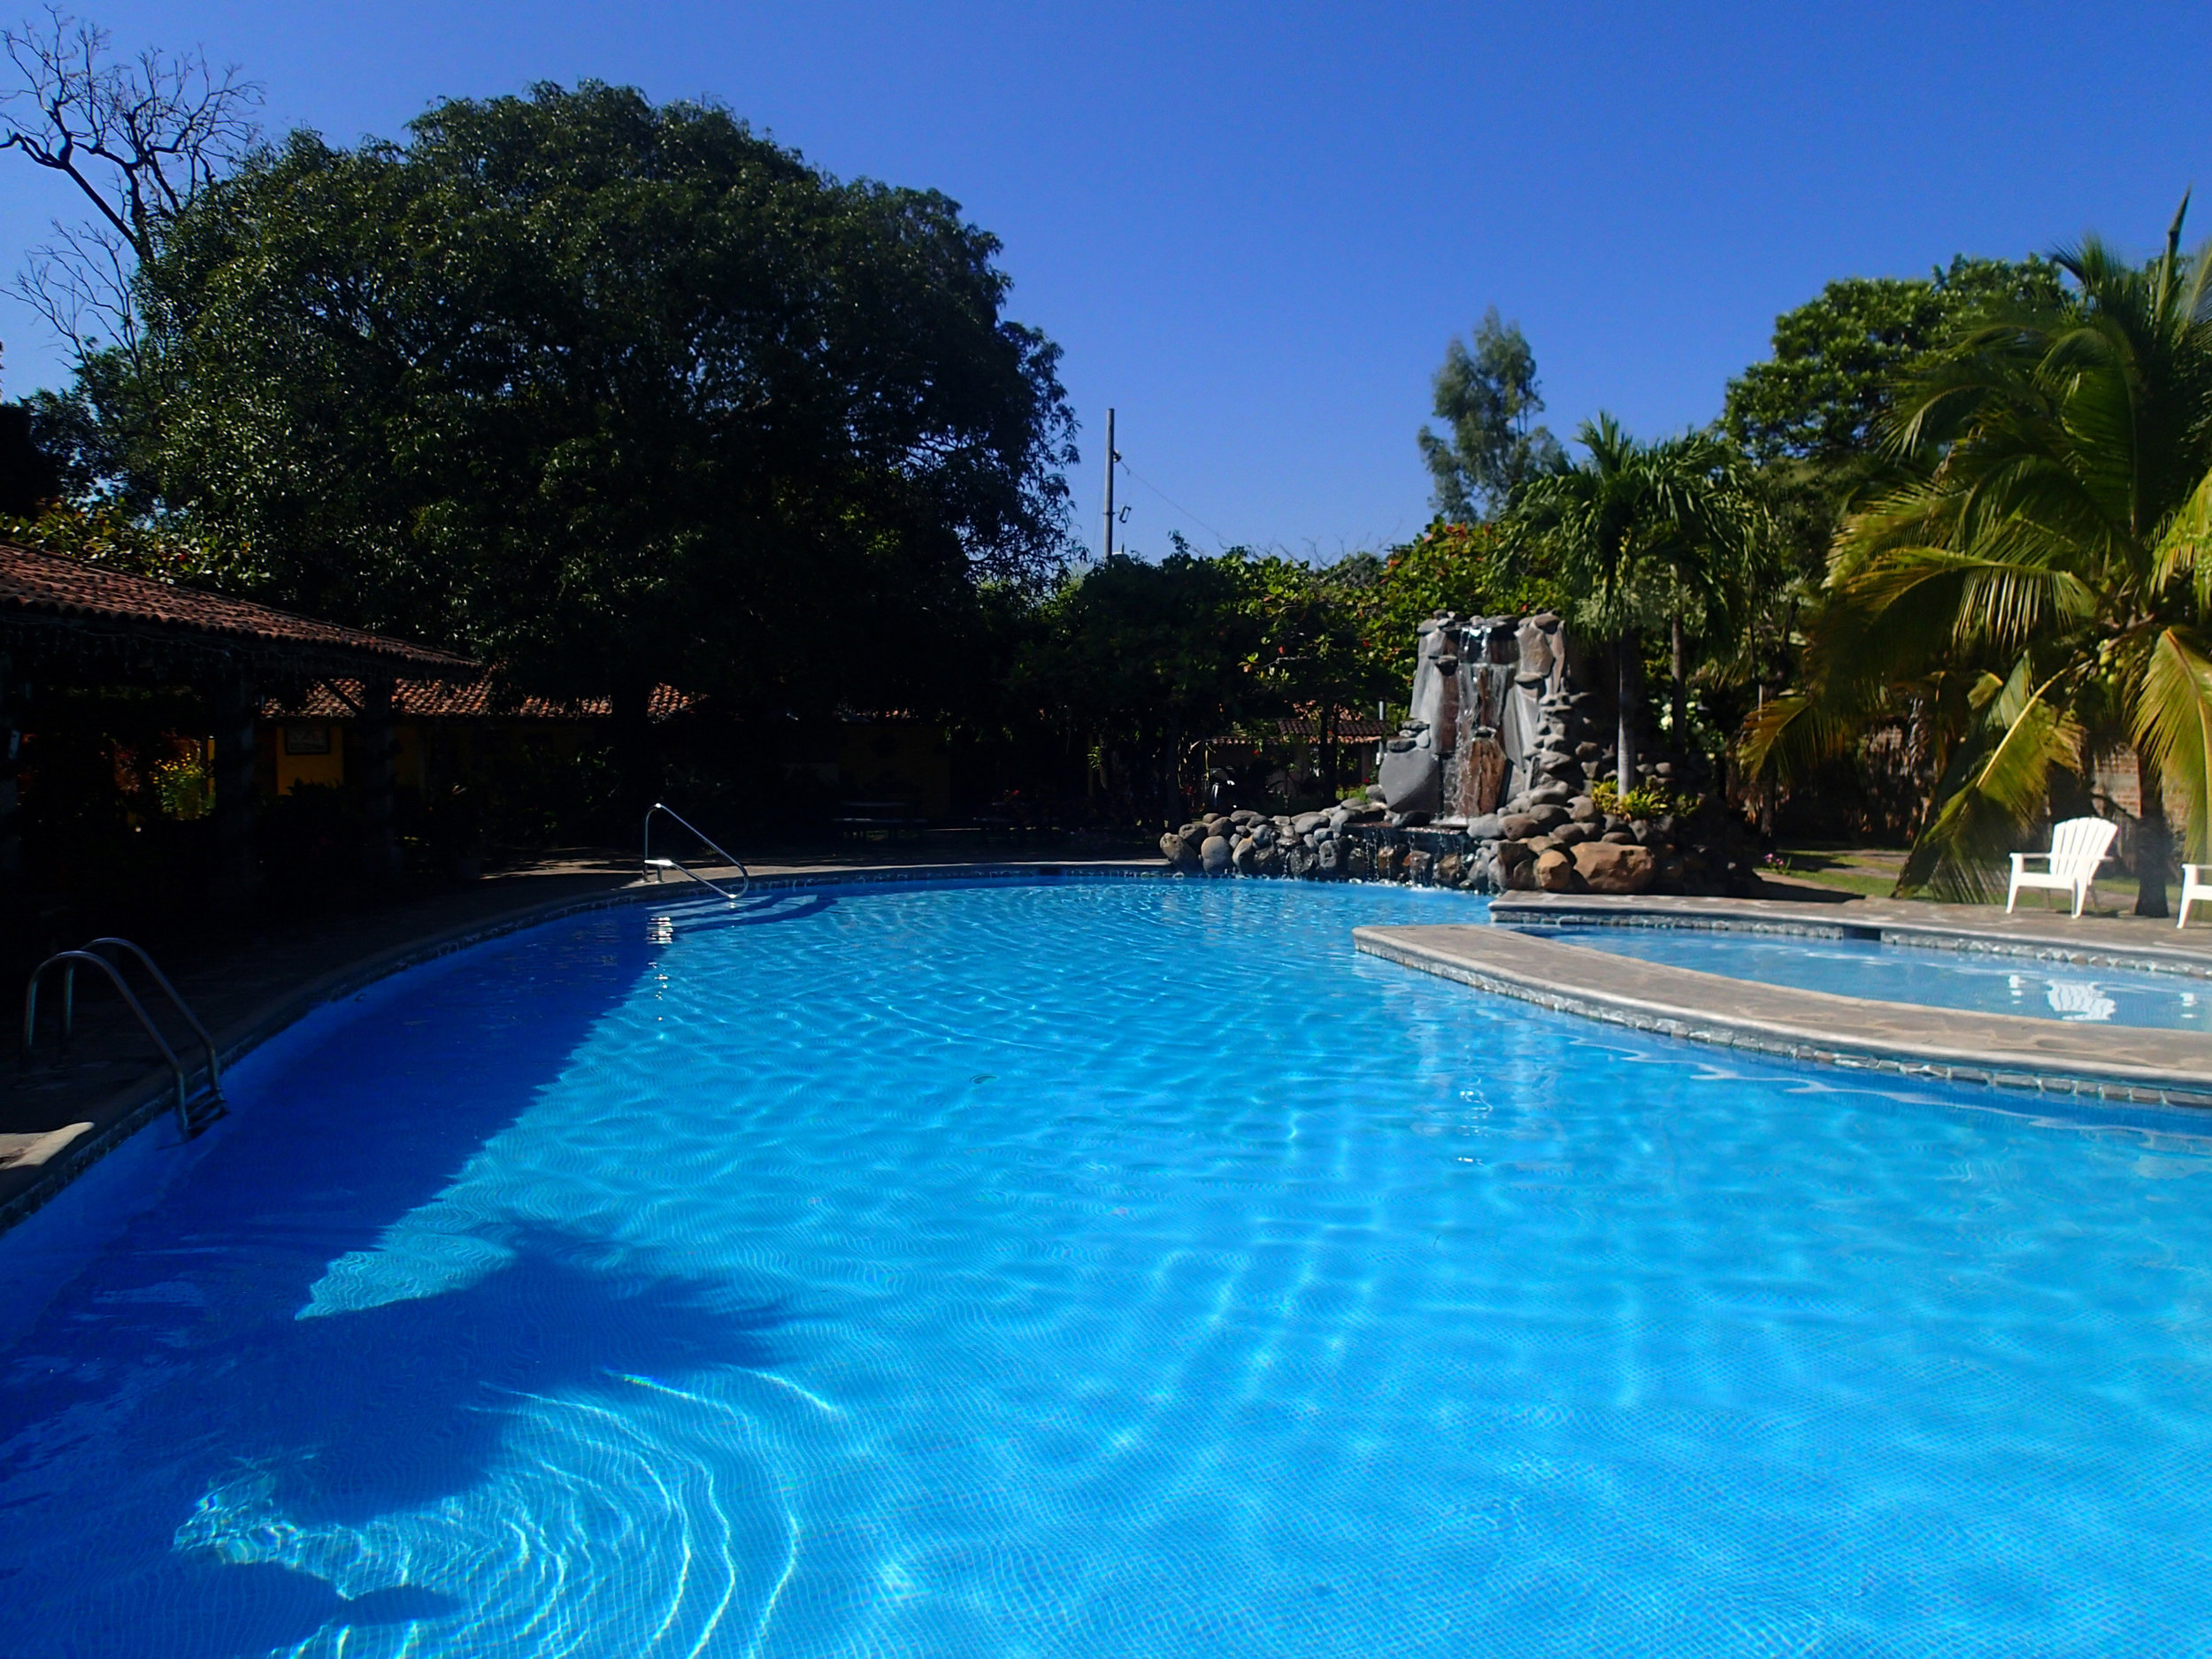 Hotel El Tejado pool.jpg